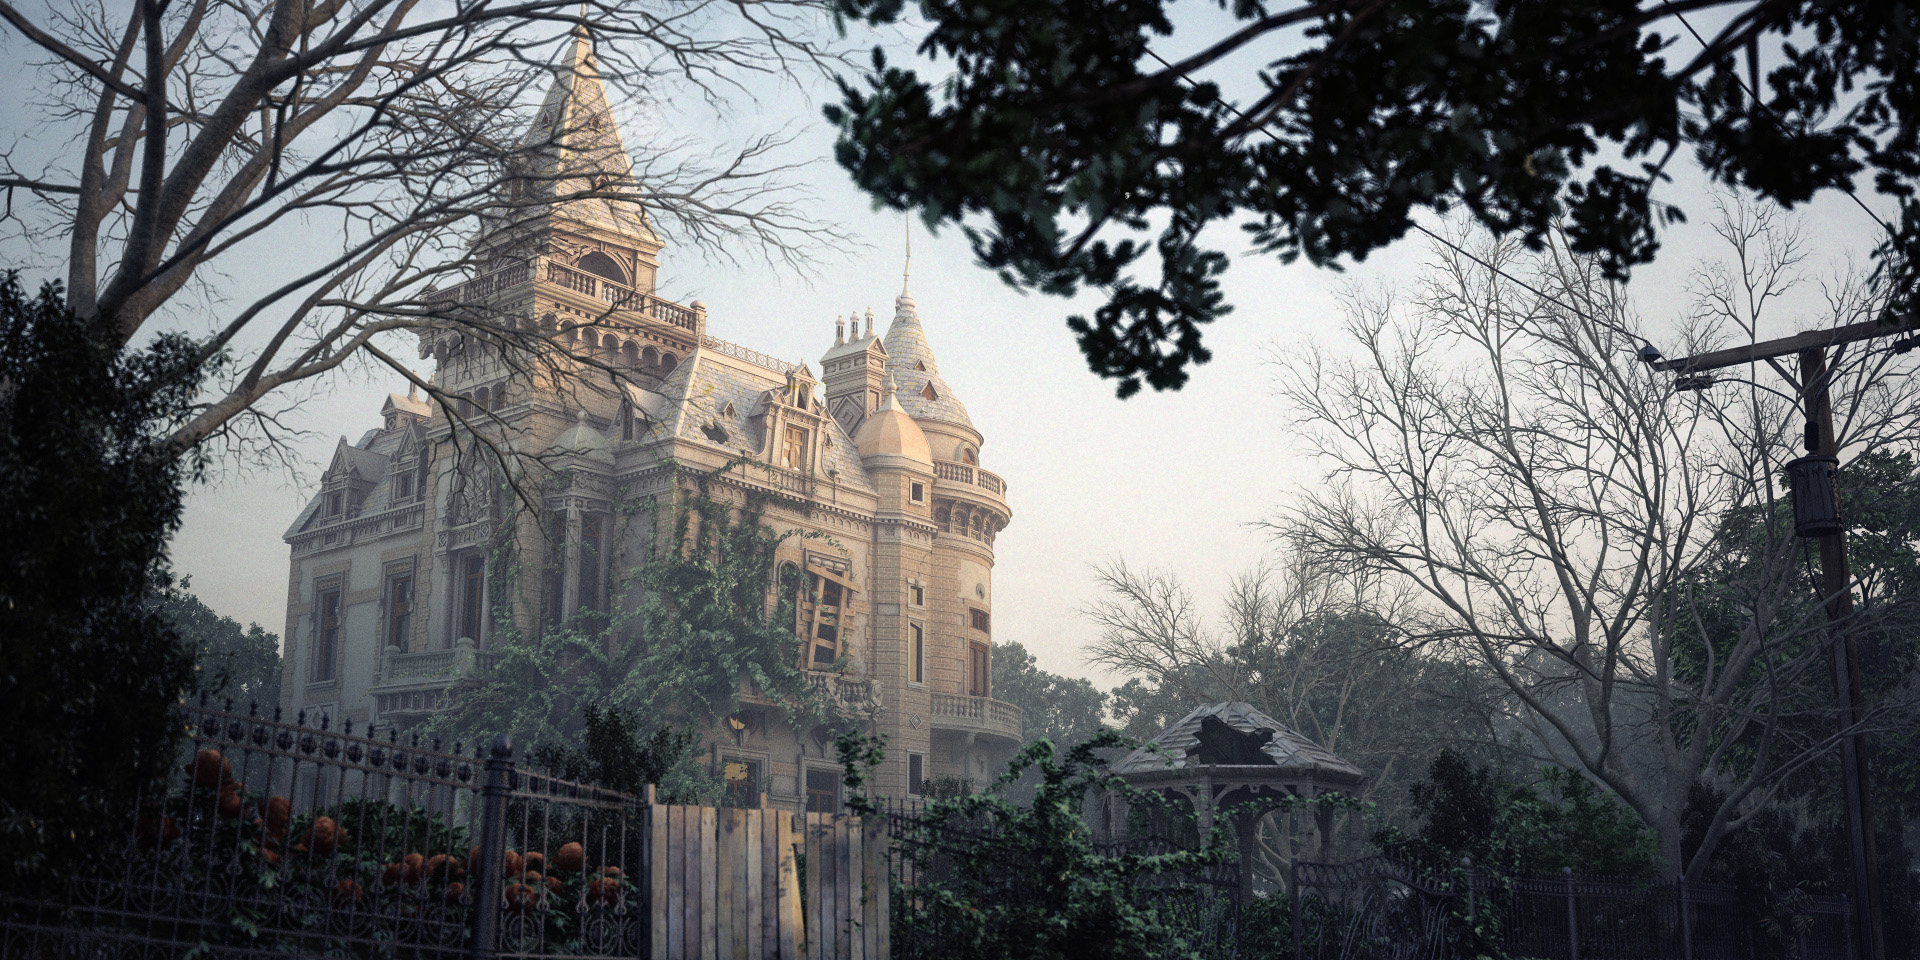 haunted_mansion_by_sanfranguy-d5f8n55.jpg